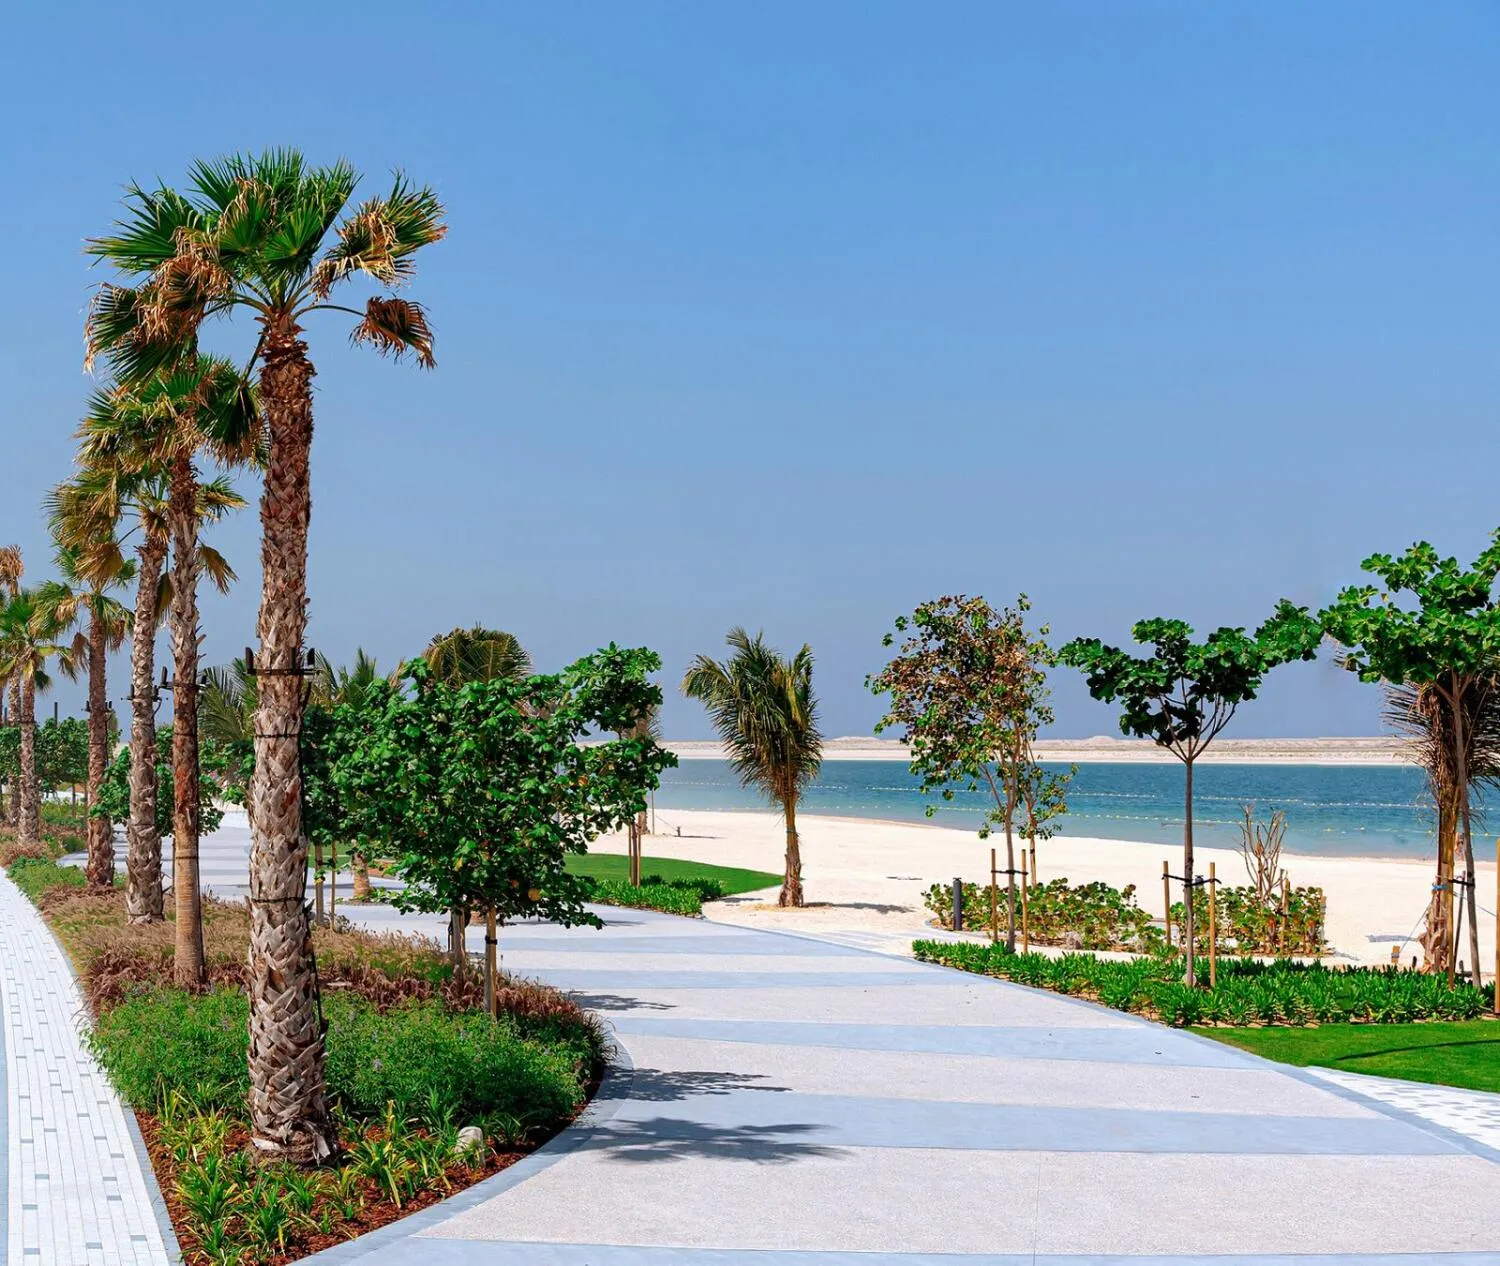 Dubai Islands Beach